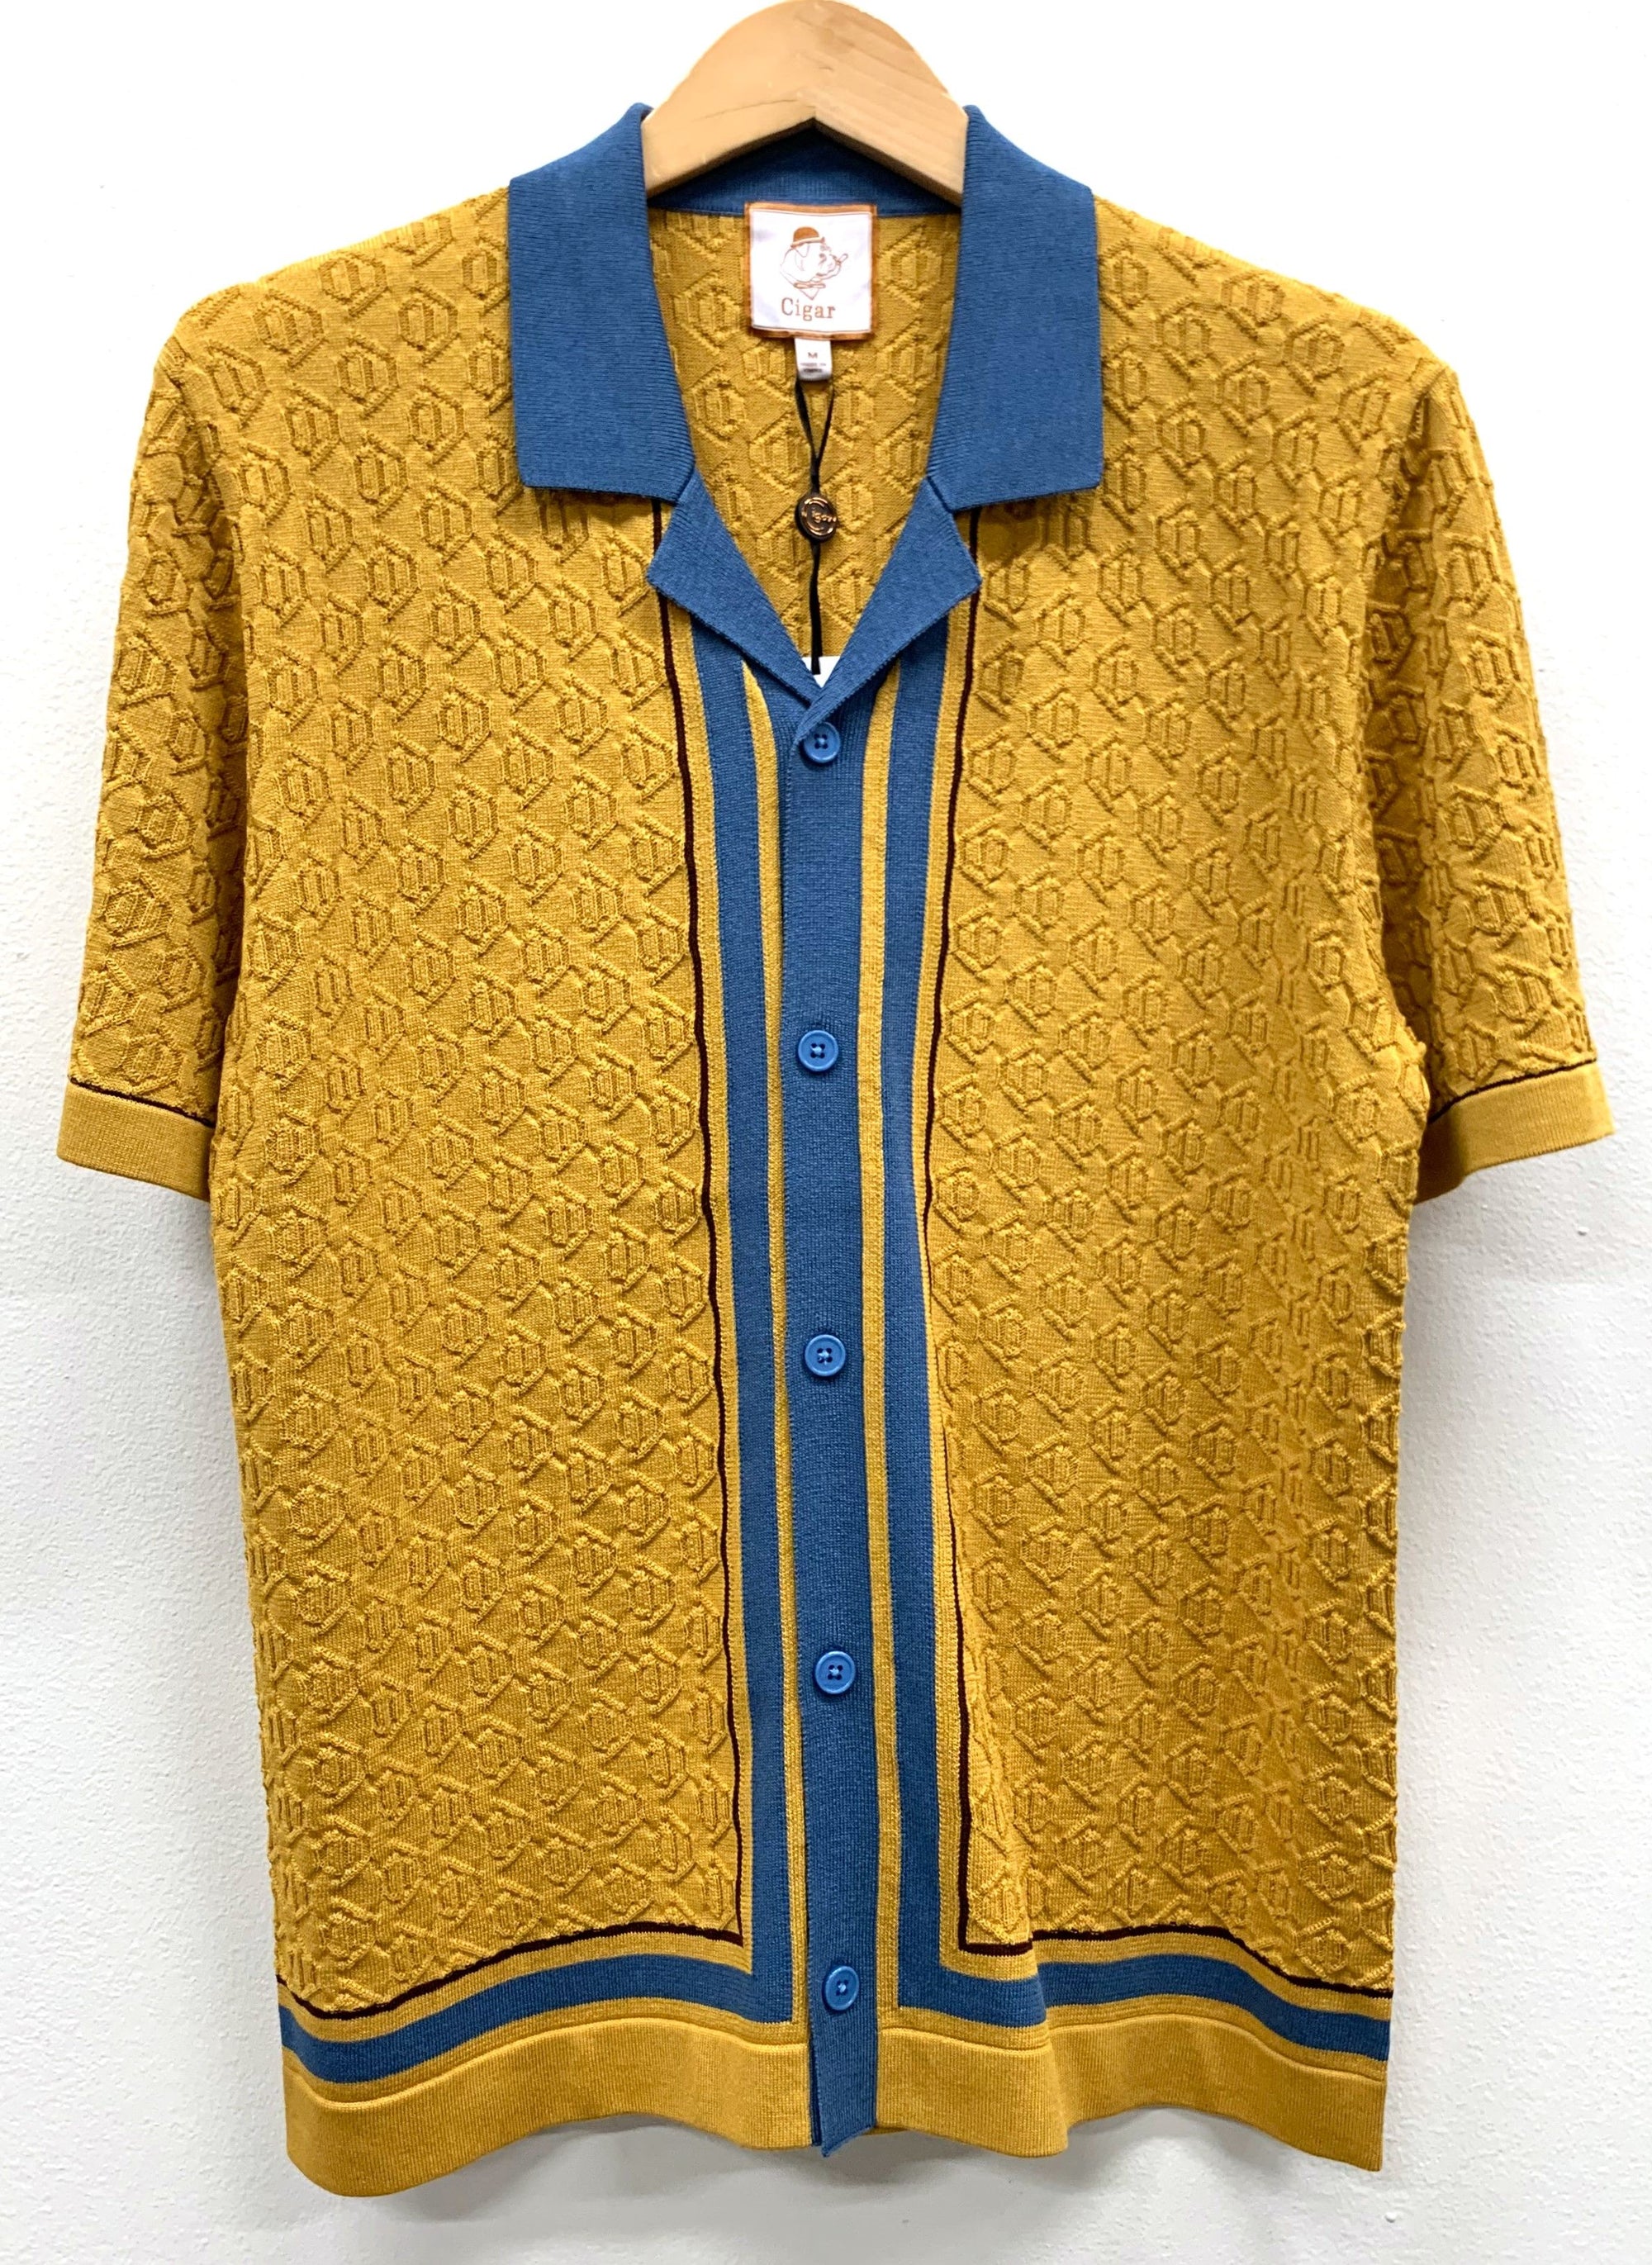 Berragamo PJ-1453 Short Sleeve Sport Shirt - Gold